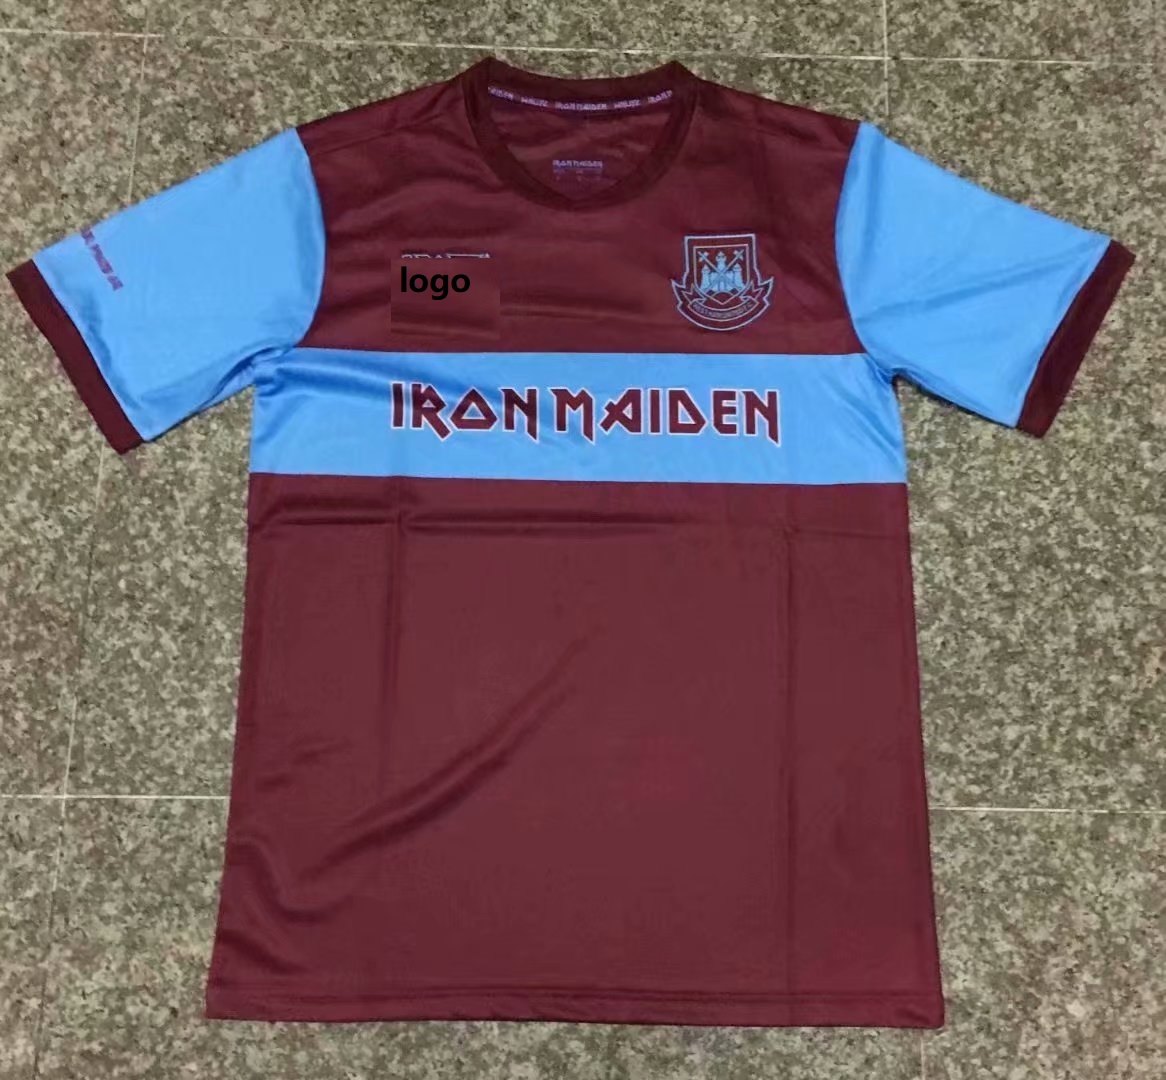 iron maiden soccer jersey